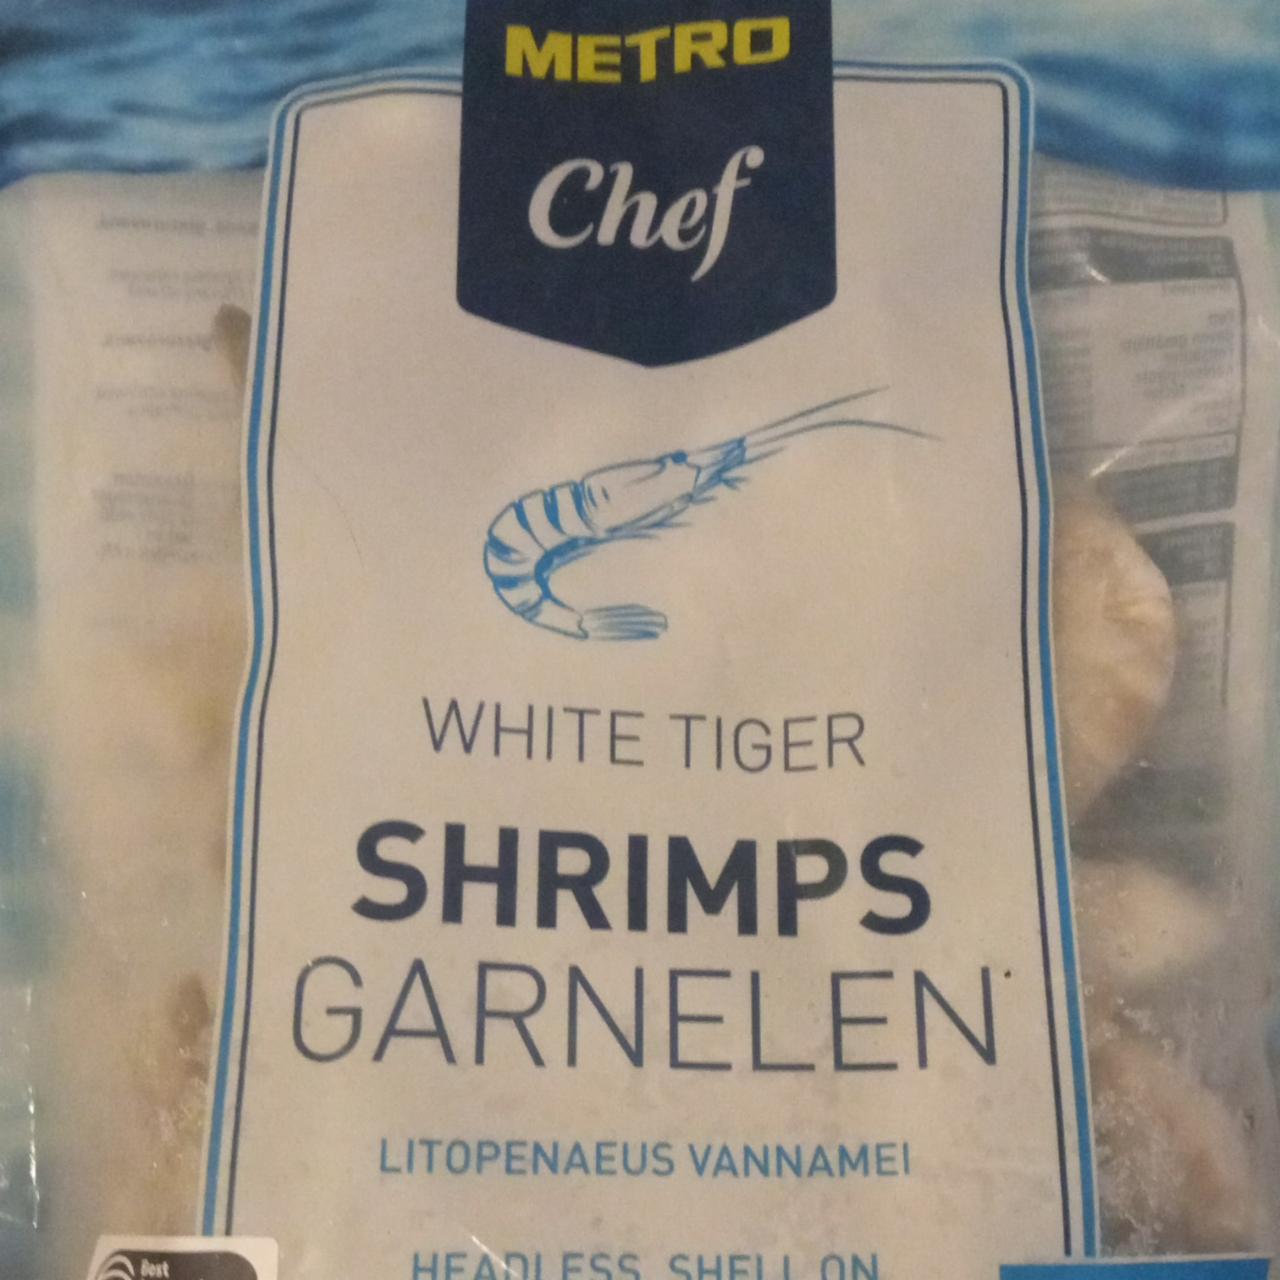 Fotografie - White Tiger Shrimps Garnelen Metro Chef